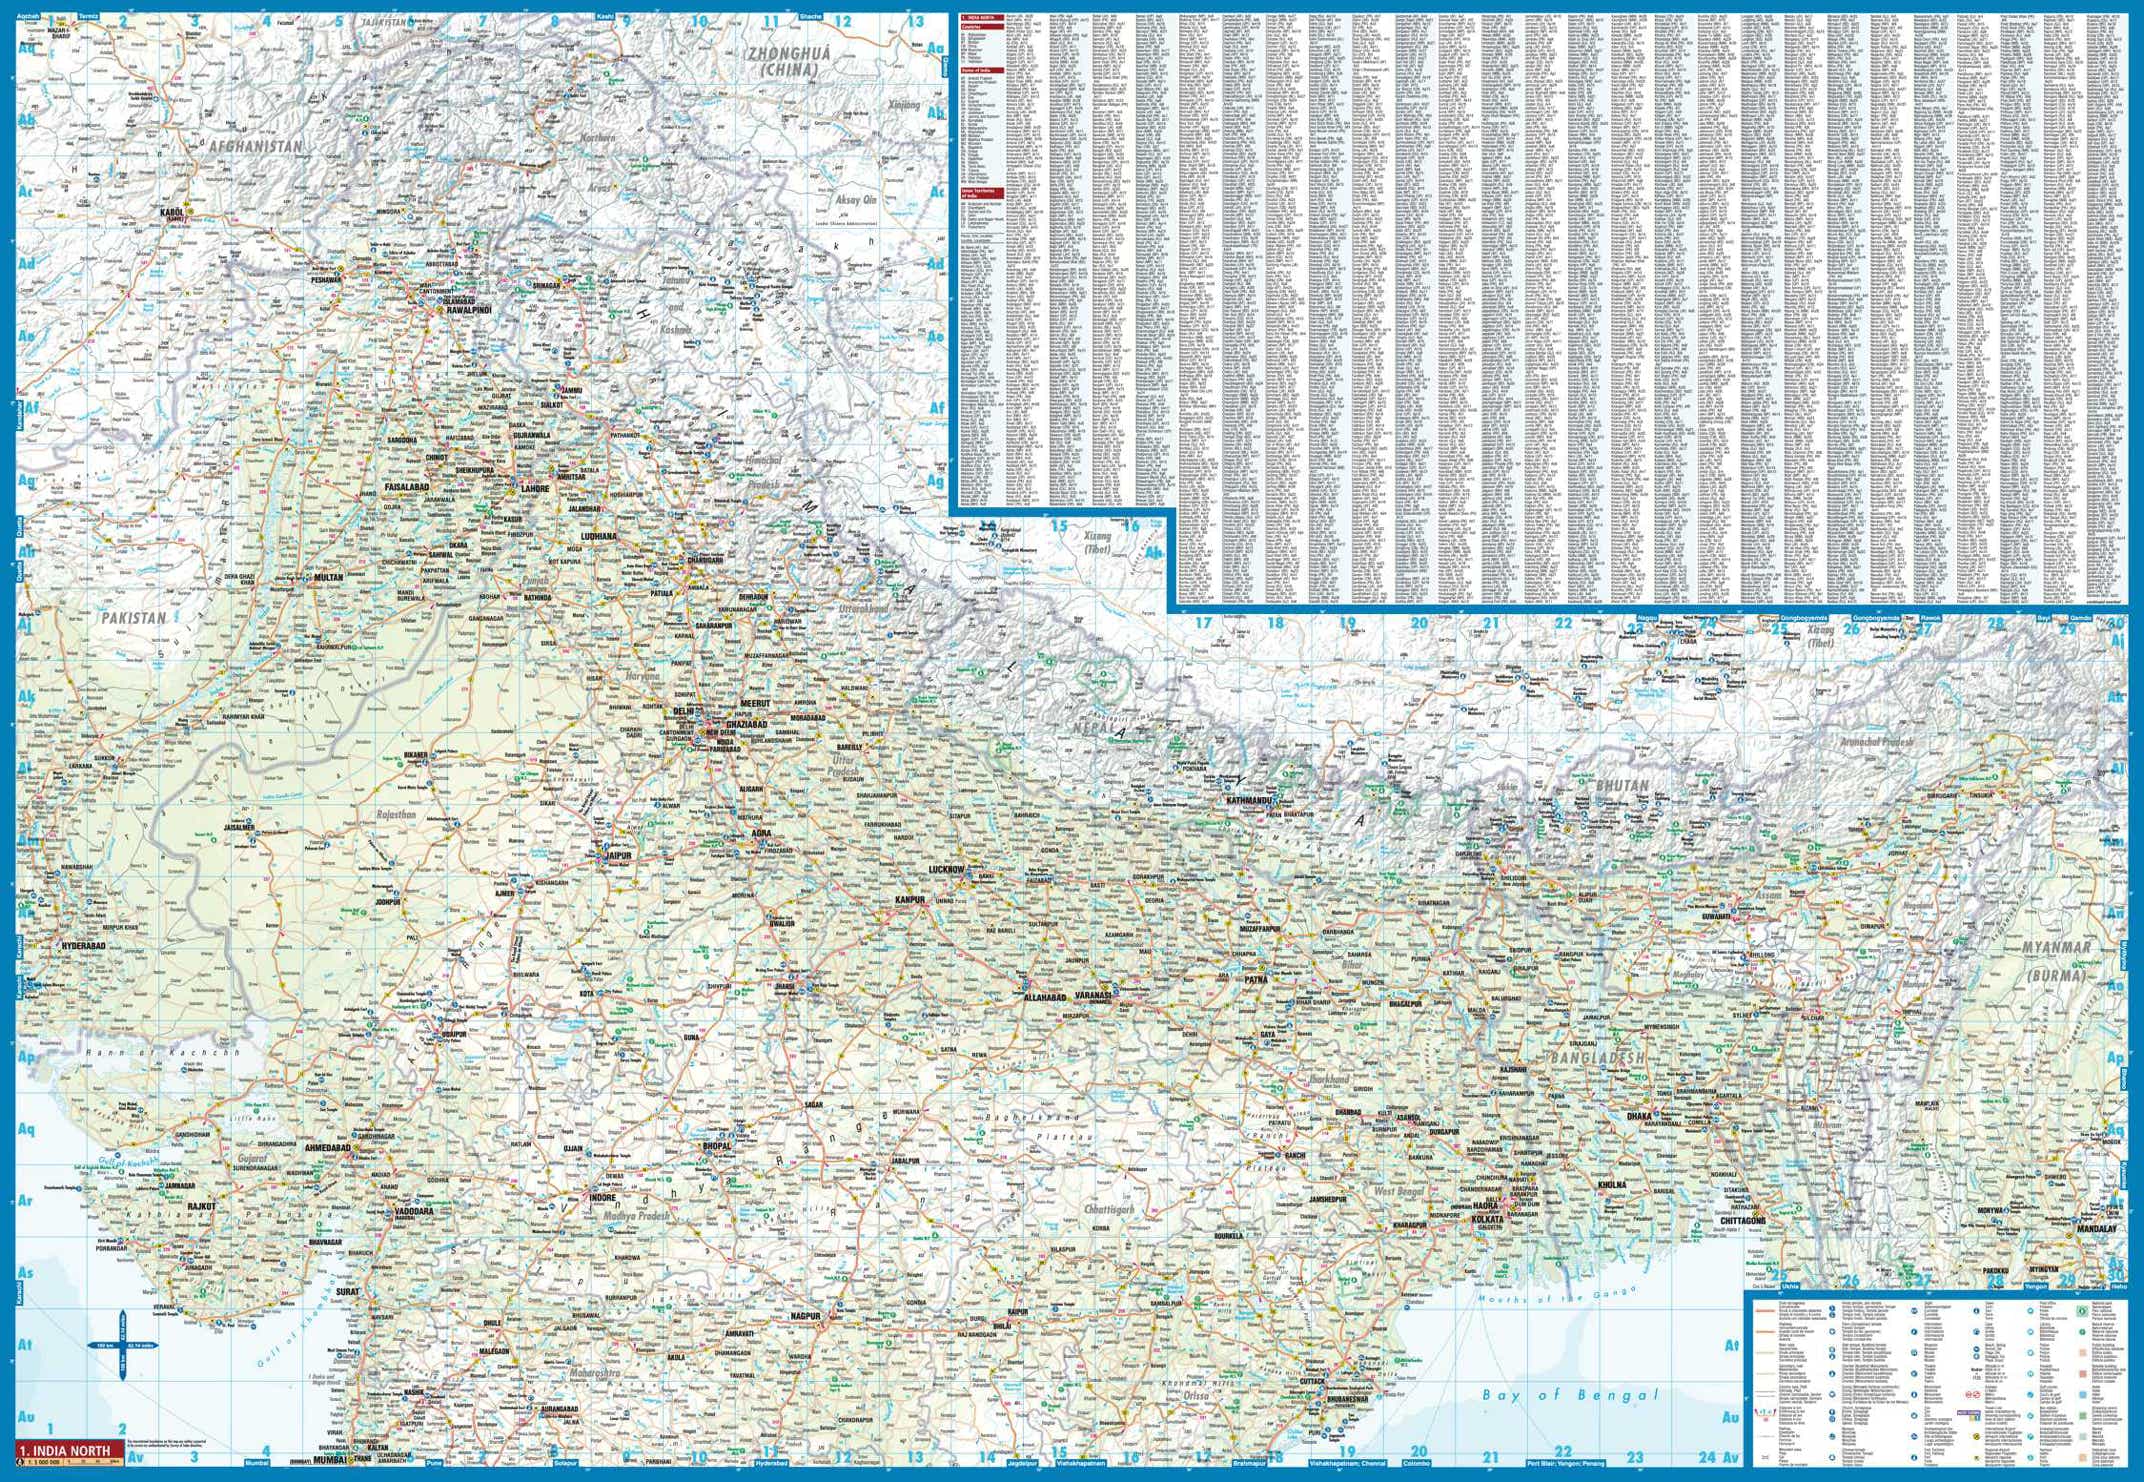 India North Borch Map - page 2